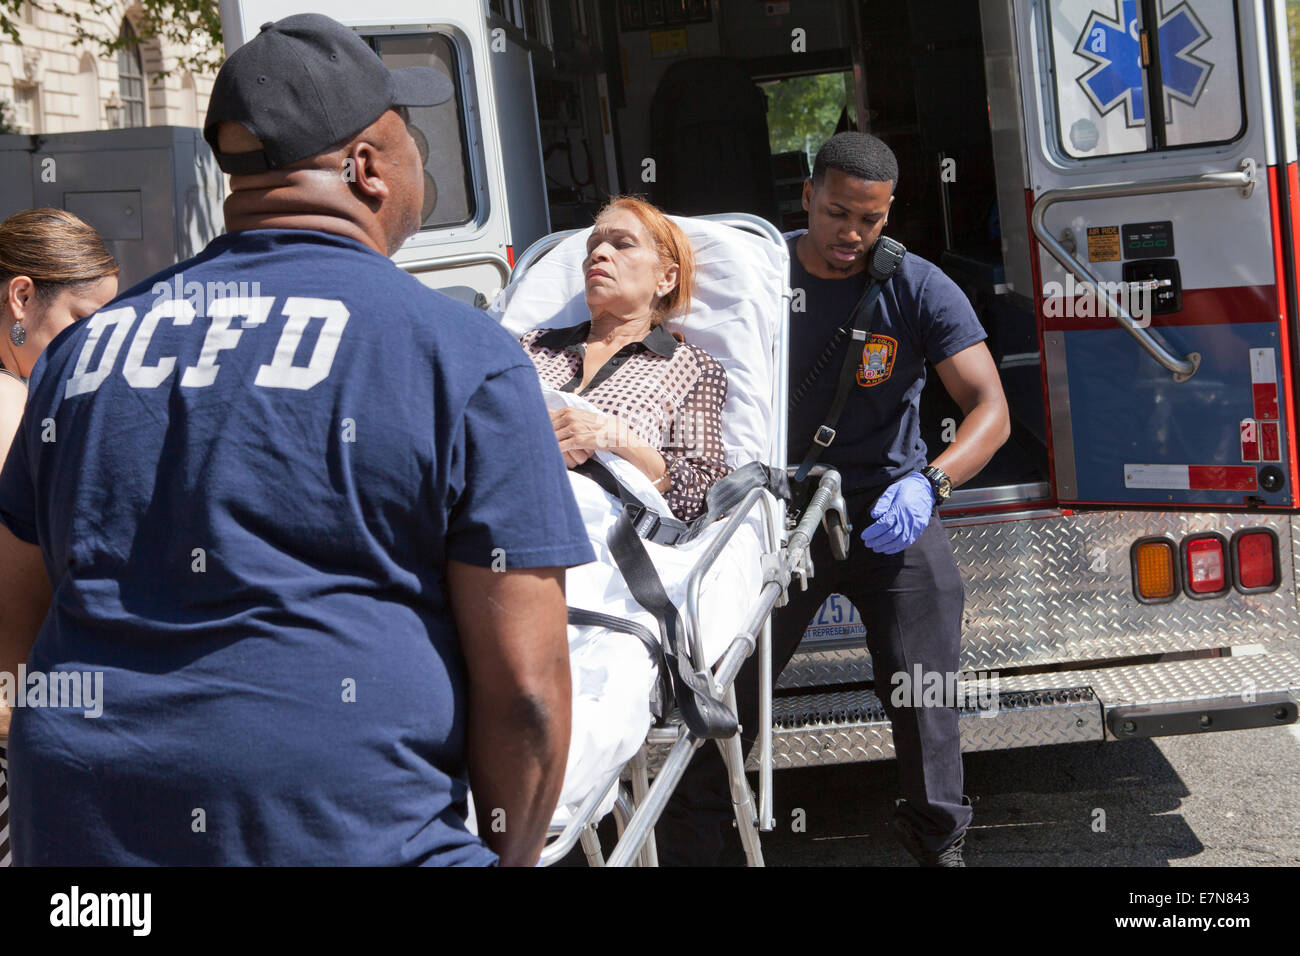 DCFD EMT loading patient into ambulance - Washington, DC USA Stock Photo